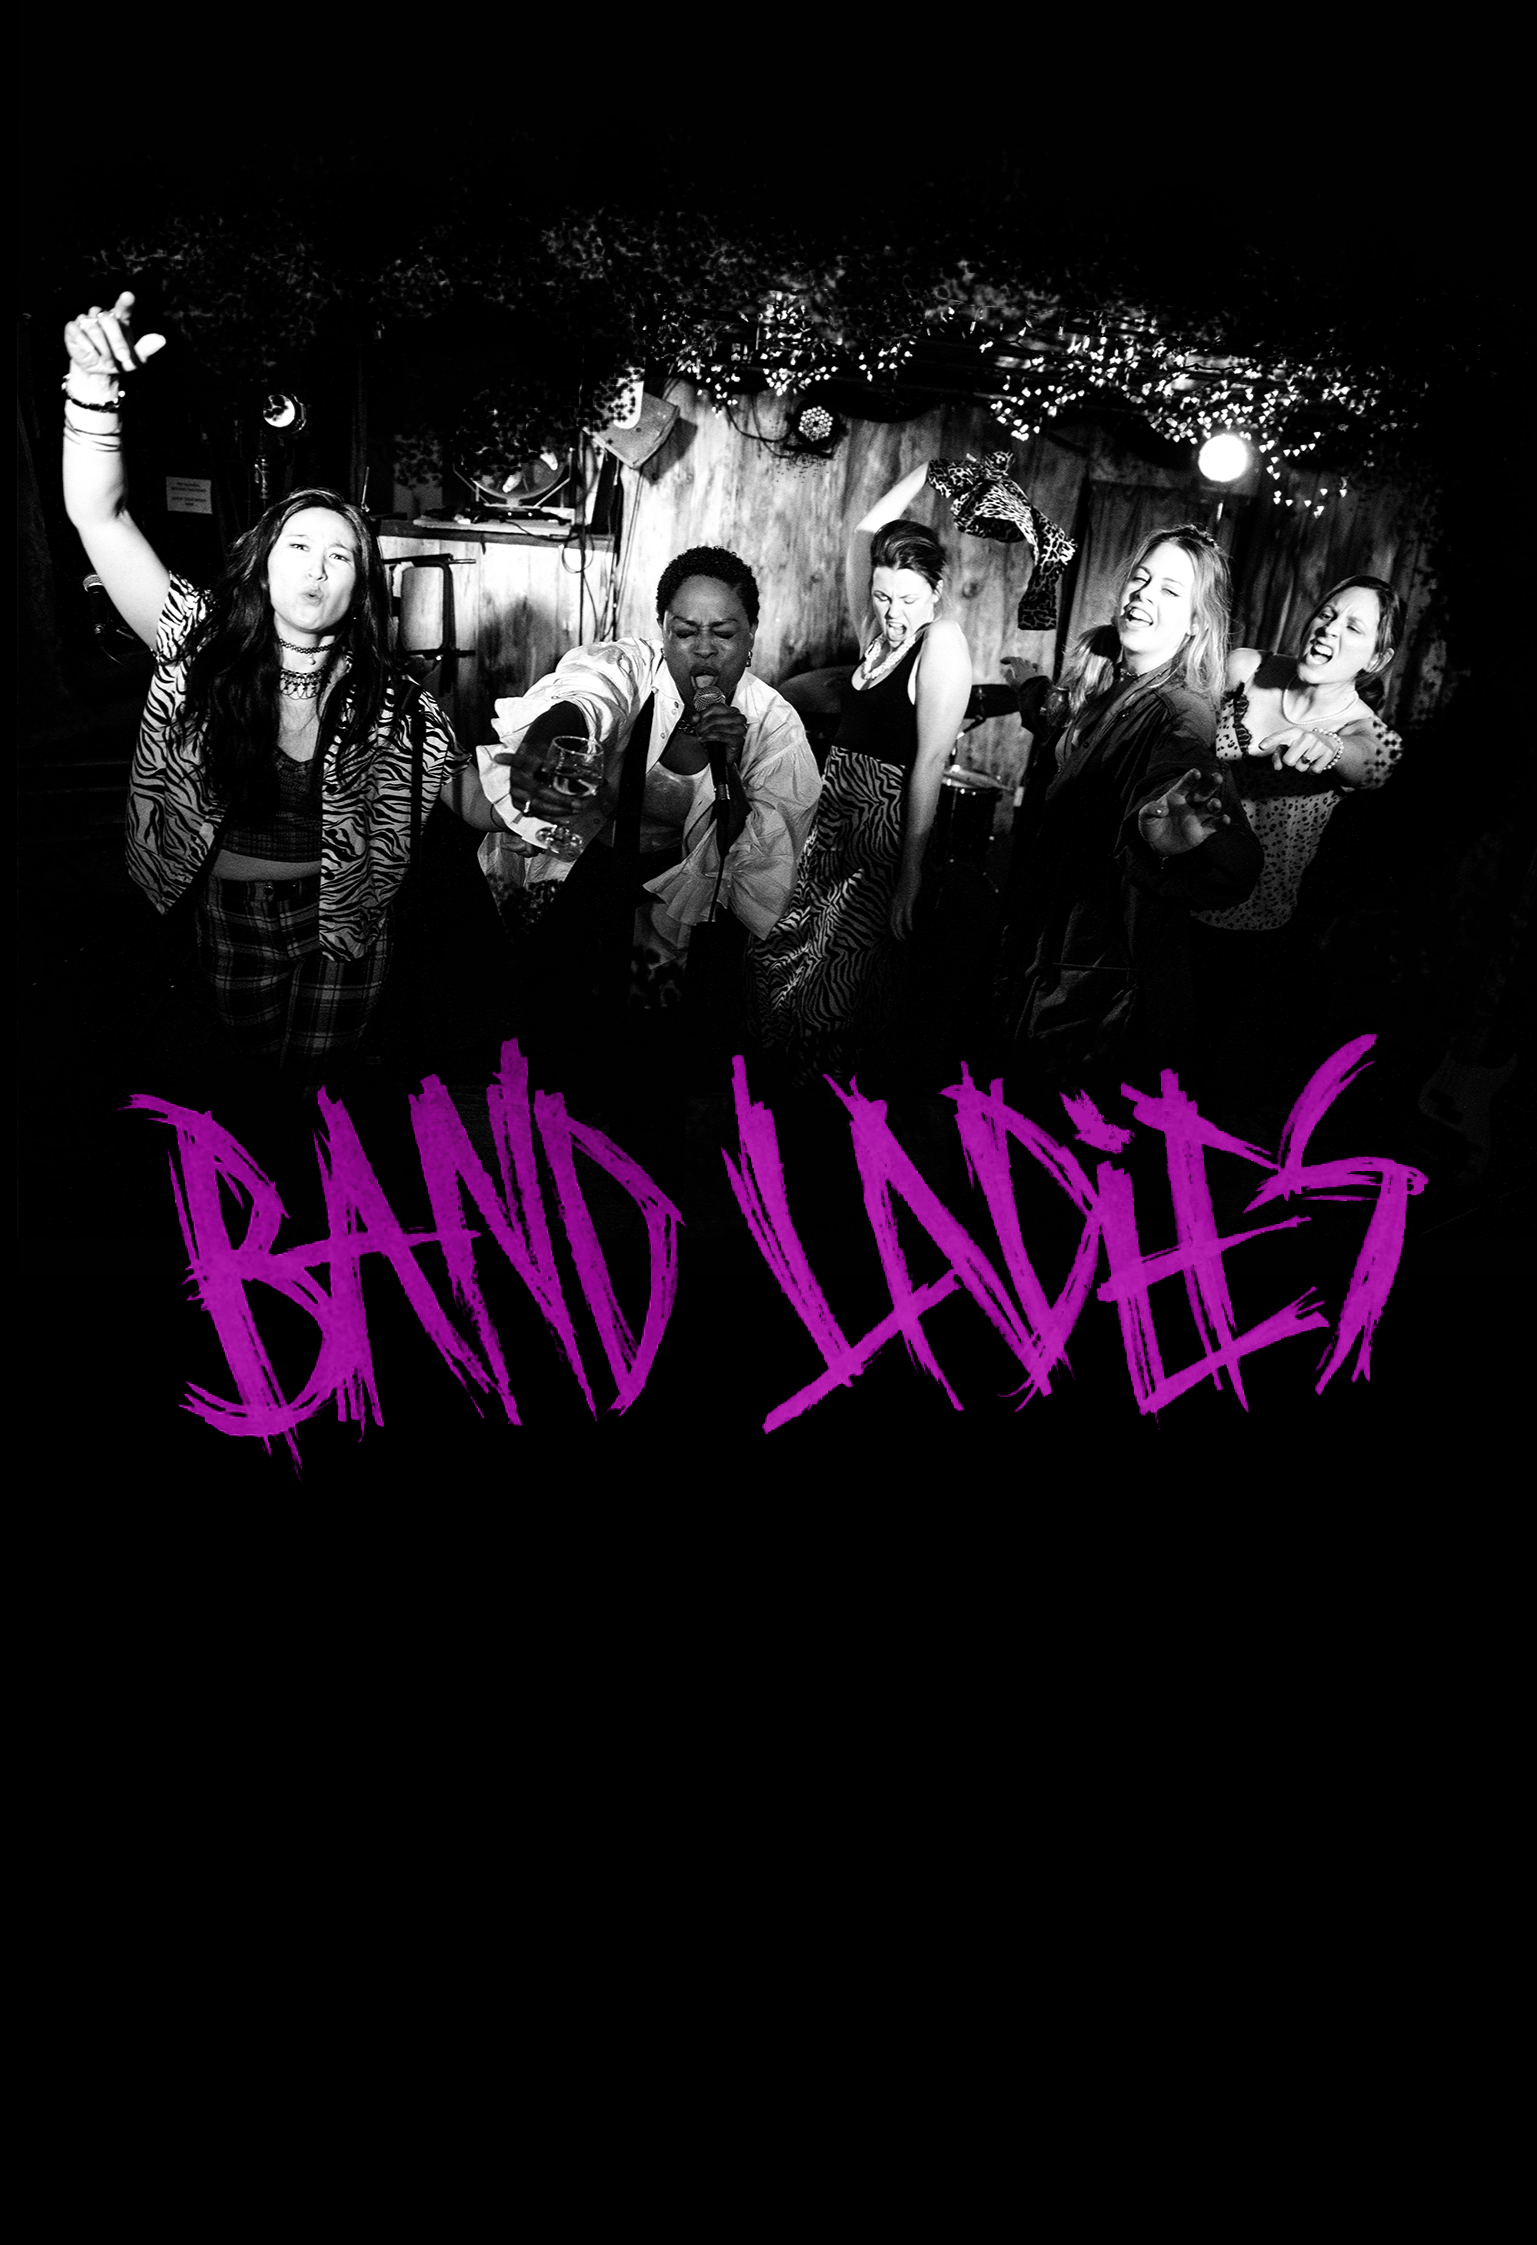 Band Ladies